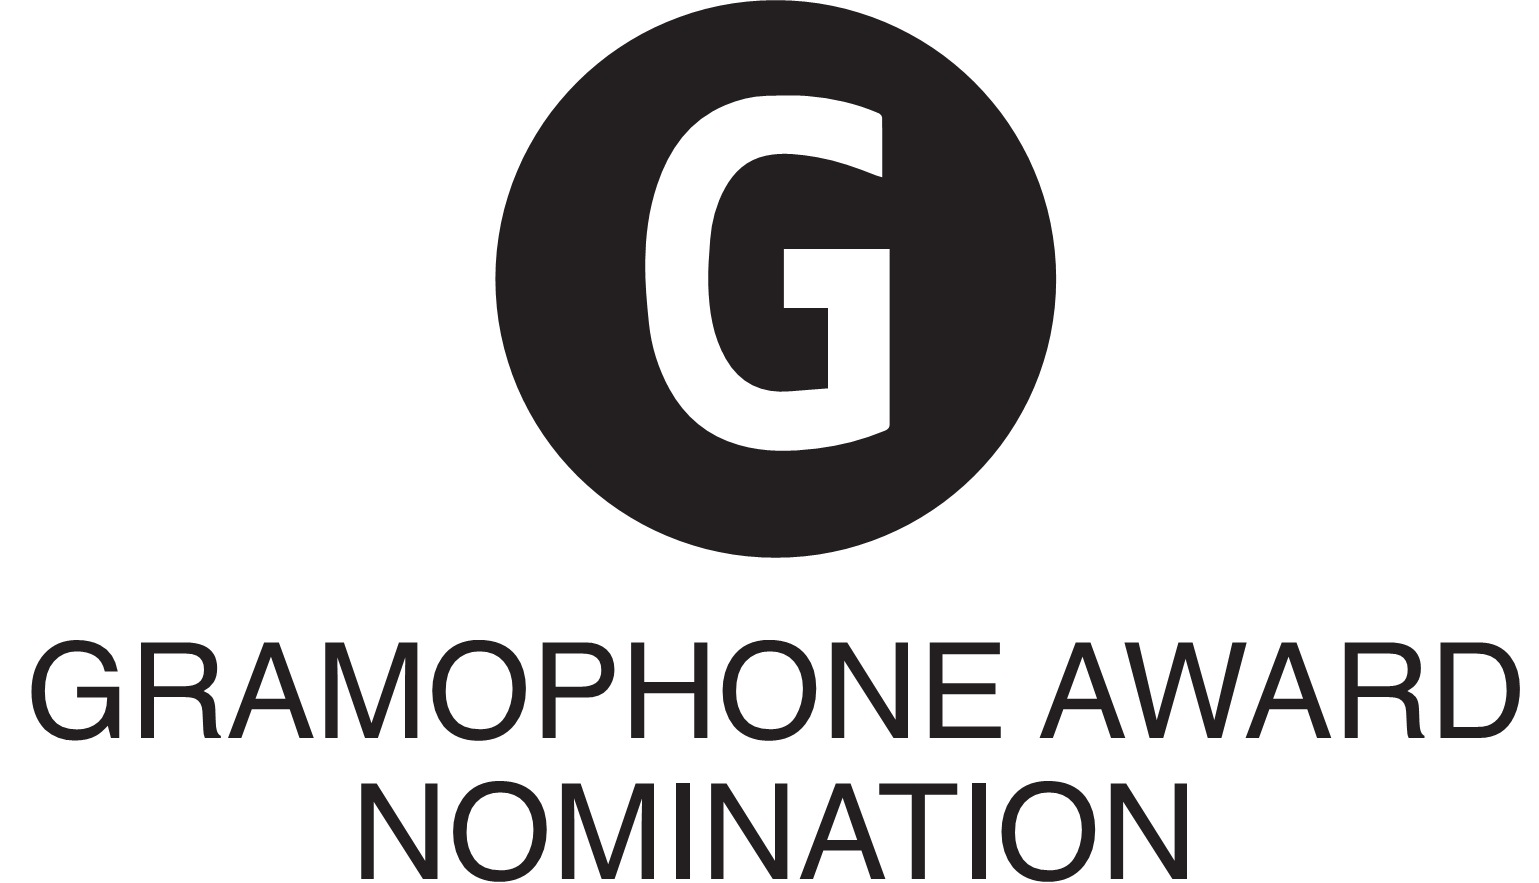 Gramophone Award: 'Nomination' (2015)